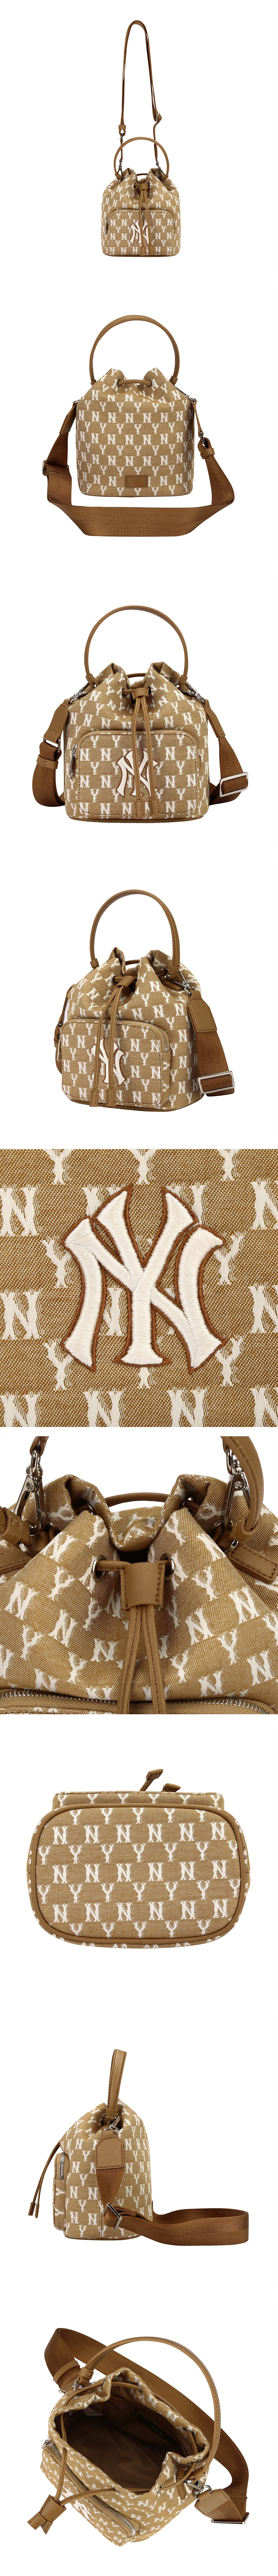 MLB Korea Monogram Jacquard Bucket Bag NY Yankees 32BG34111-50B